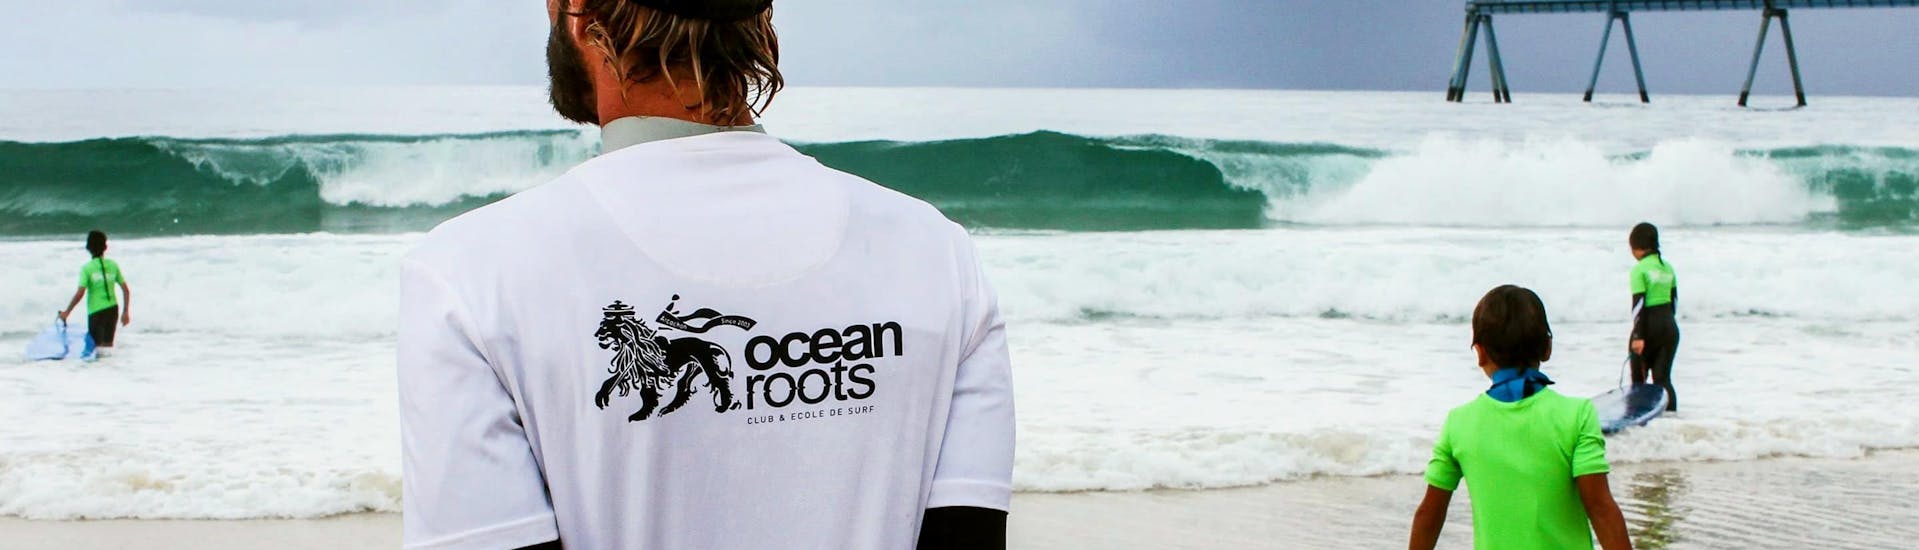 surfing-lessons-on-salie-beach-high-season-ocean-roots-hero